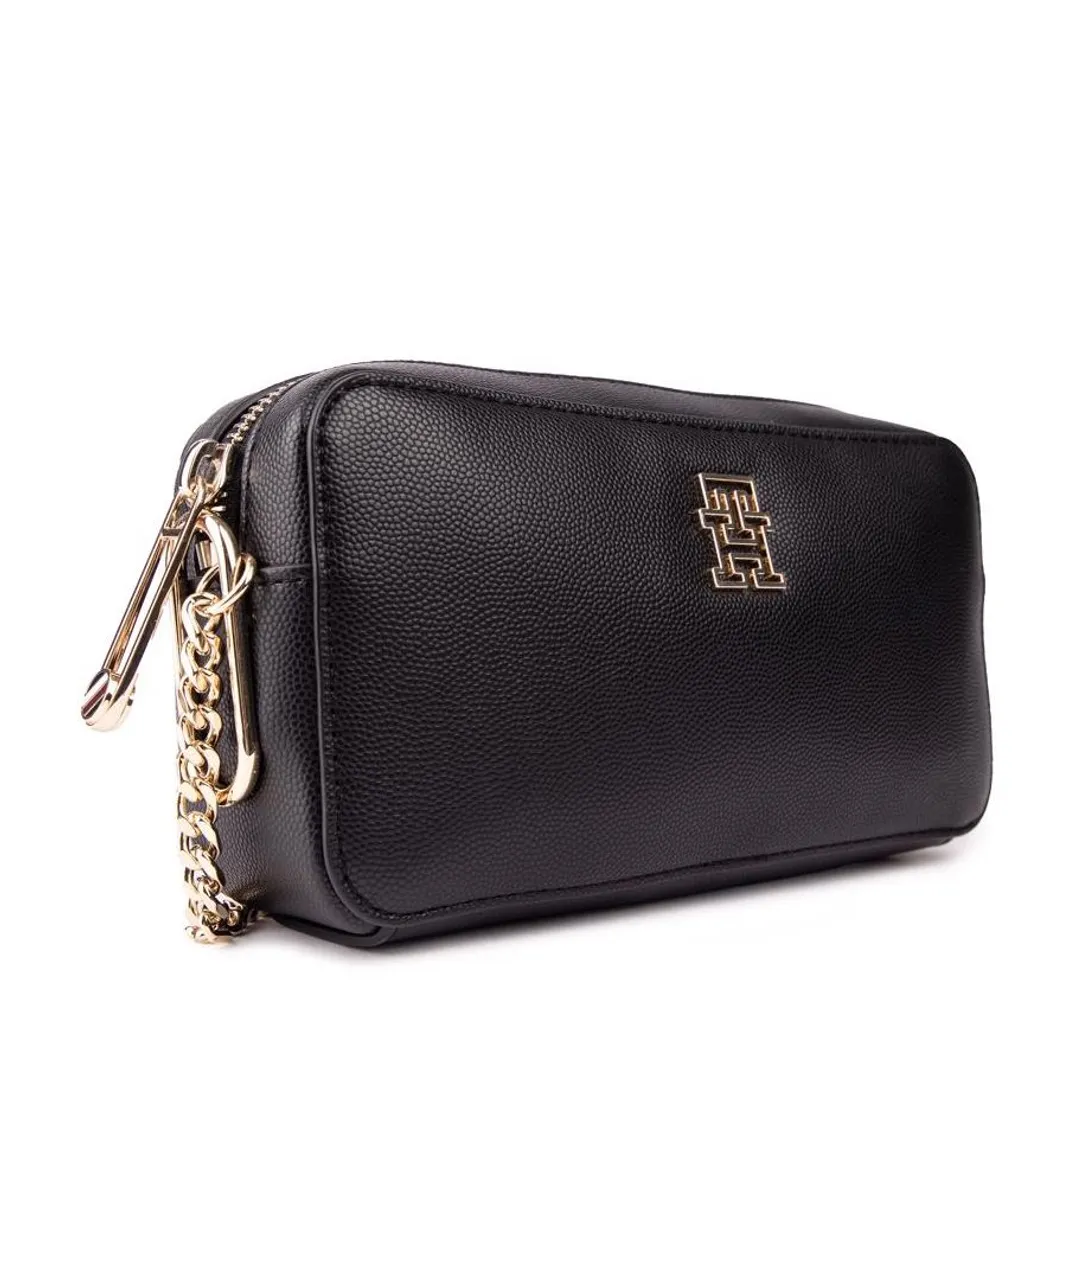 Tommy Hilfiger Womens Timeless Chain Handbag - Black - One Size